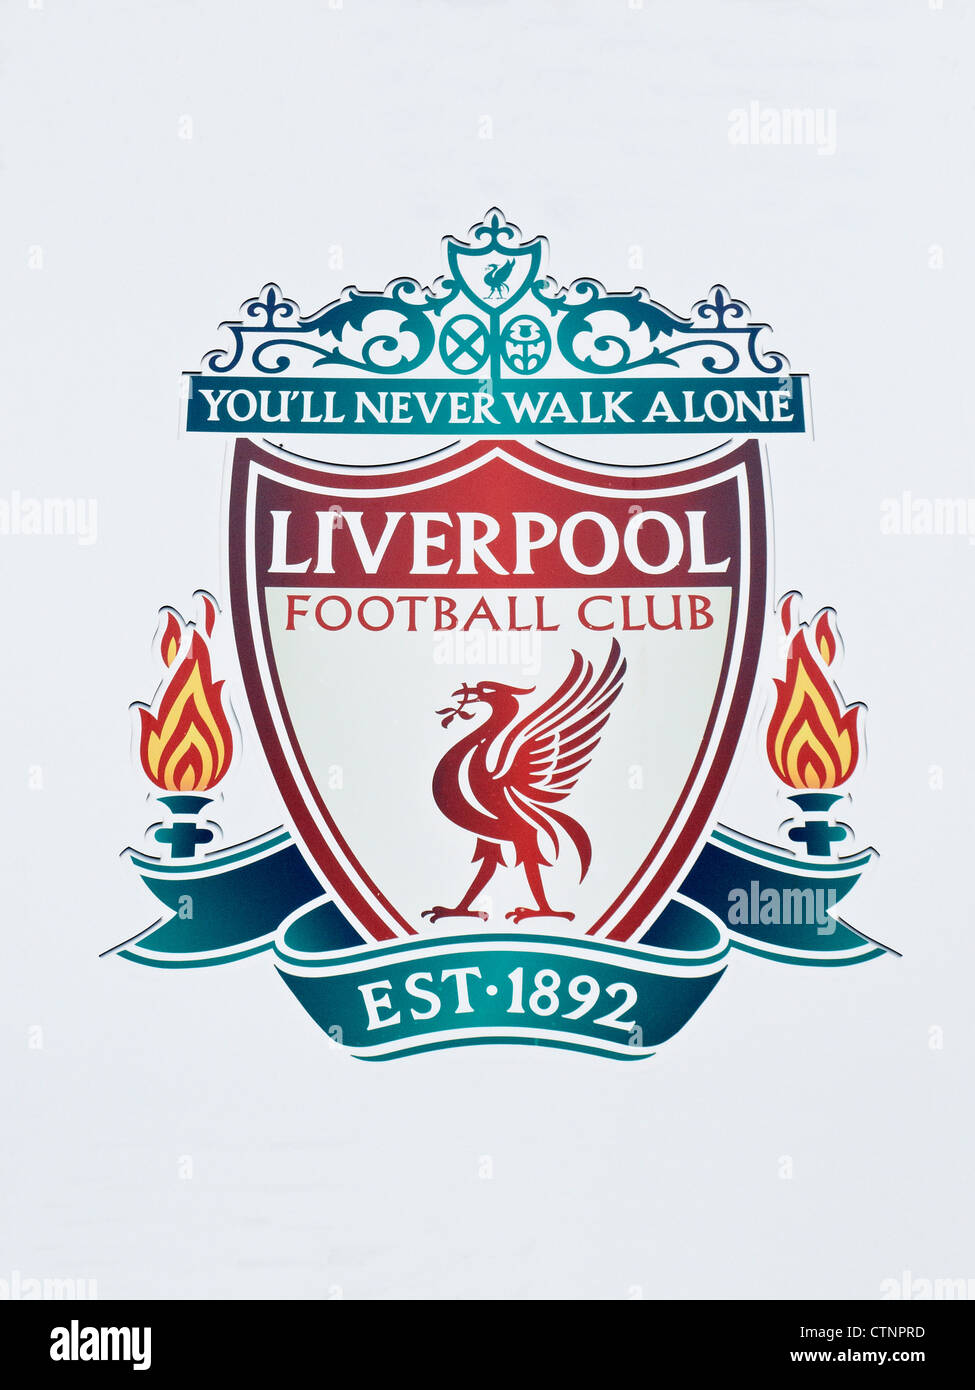 Liverpool Football Club logo Stock Photo